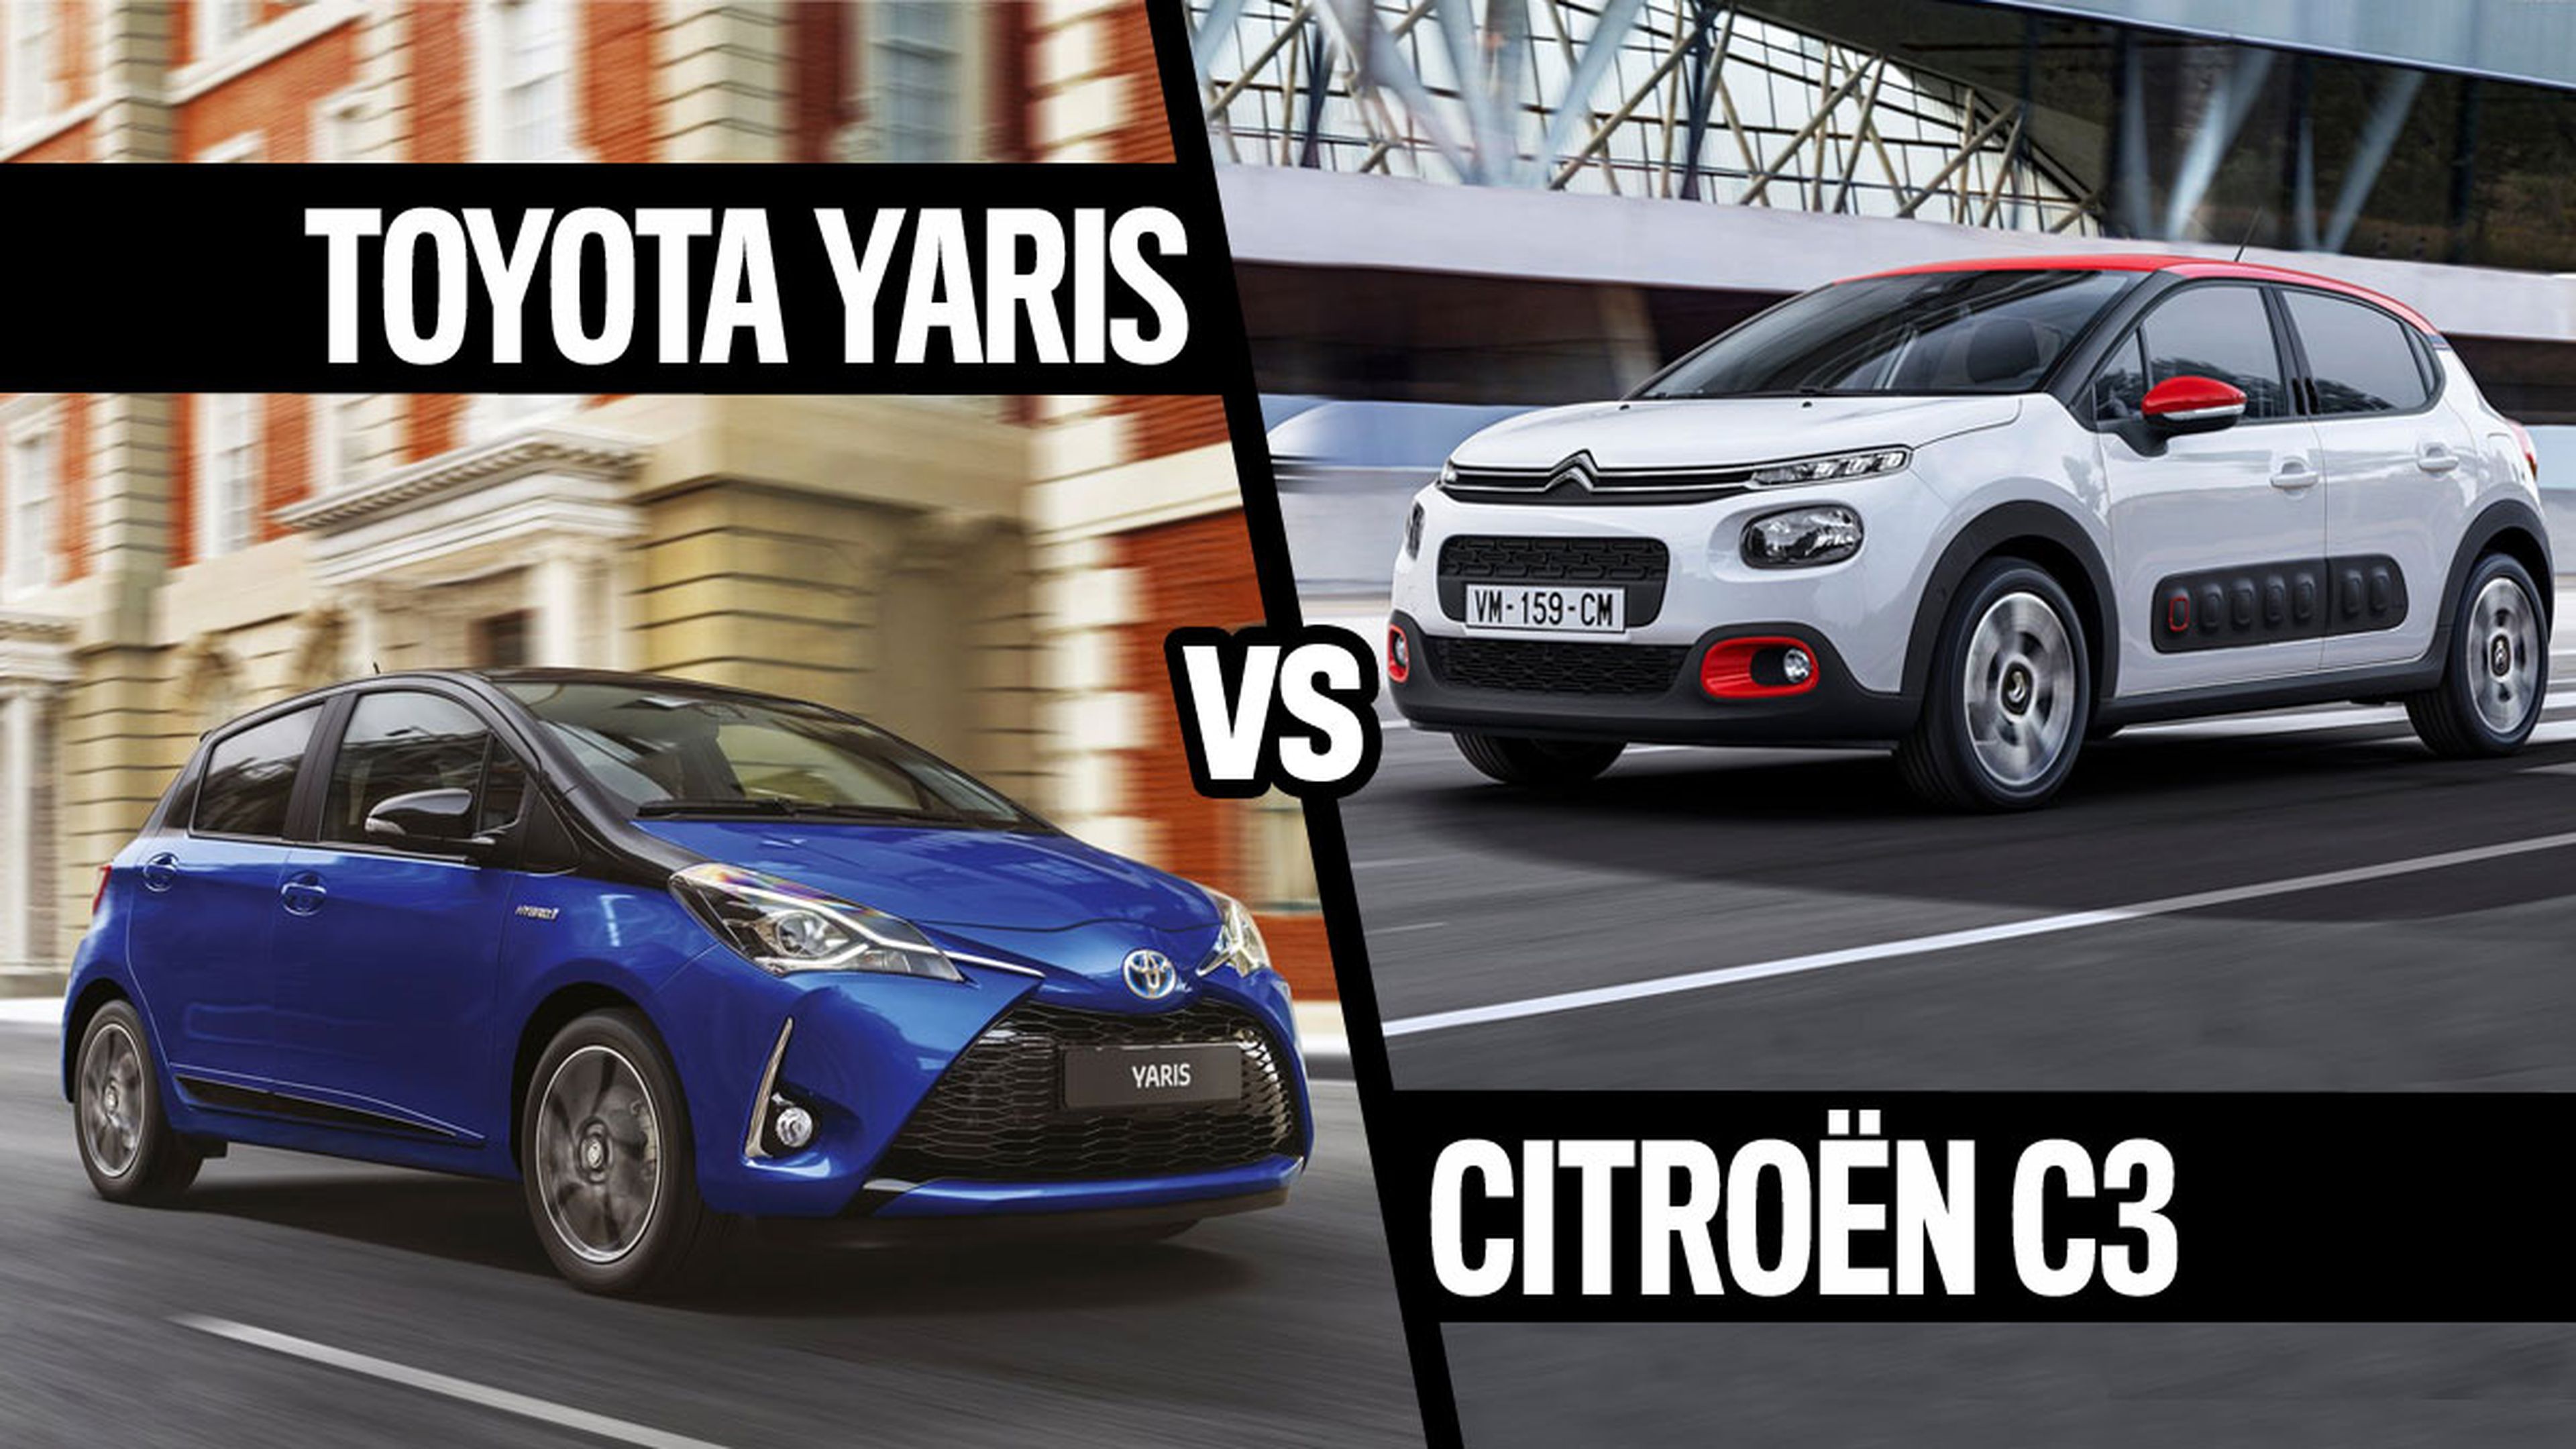 Toyota Yaris vs Citroën C3